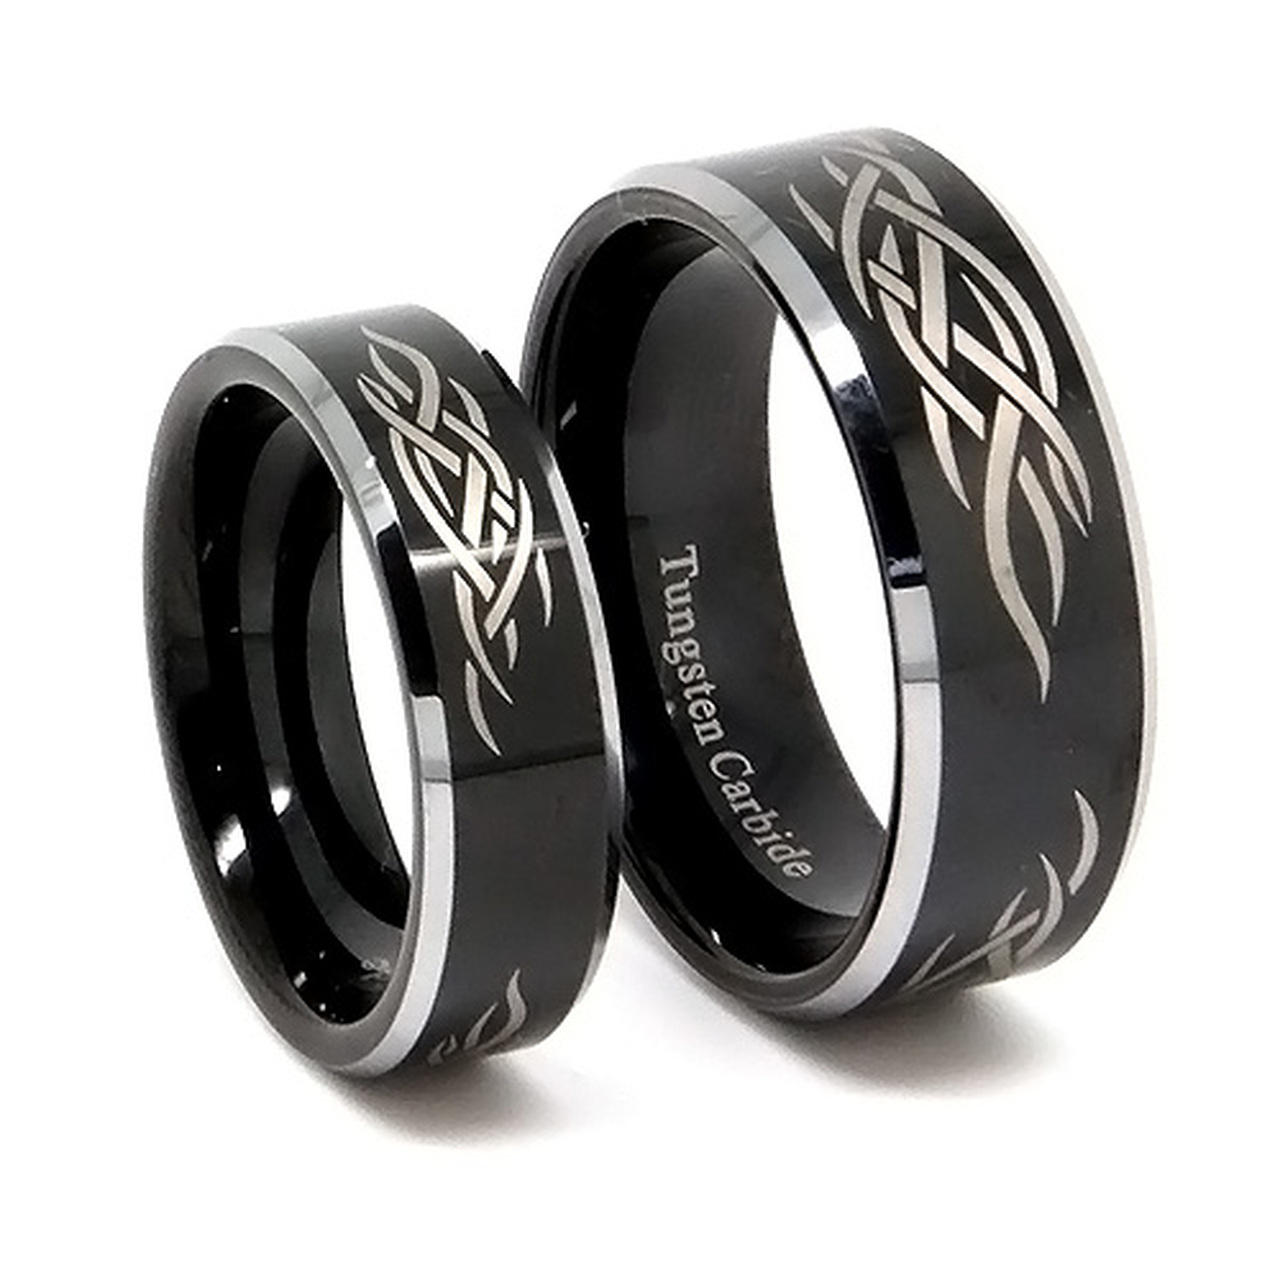 ATOP Jewelry -  Black Tungsten Wedding Band Set, Titanium Top Matching Rings, Laser